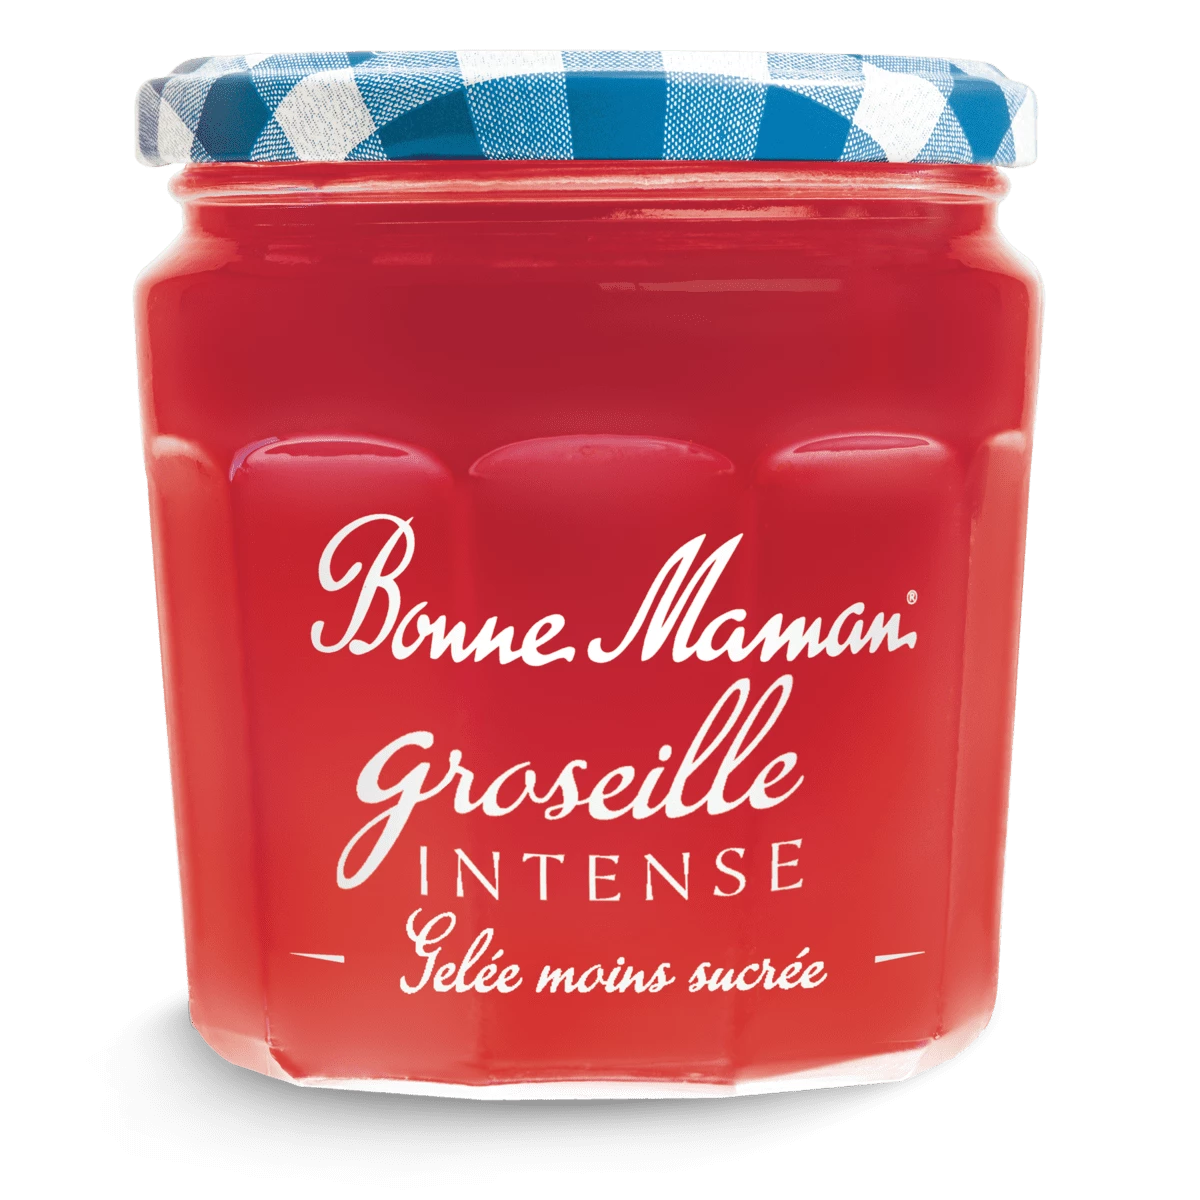 Intense redcurrant jelly 335g - BONNE MAMAN